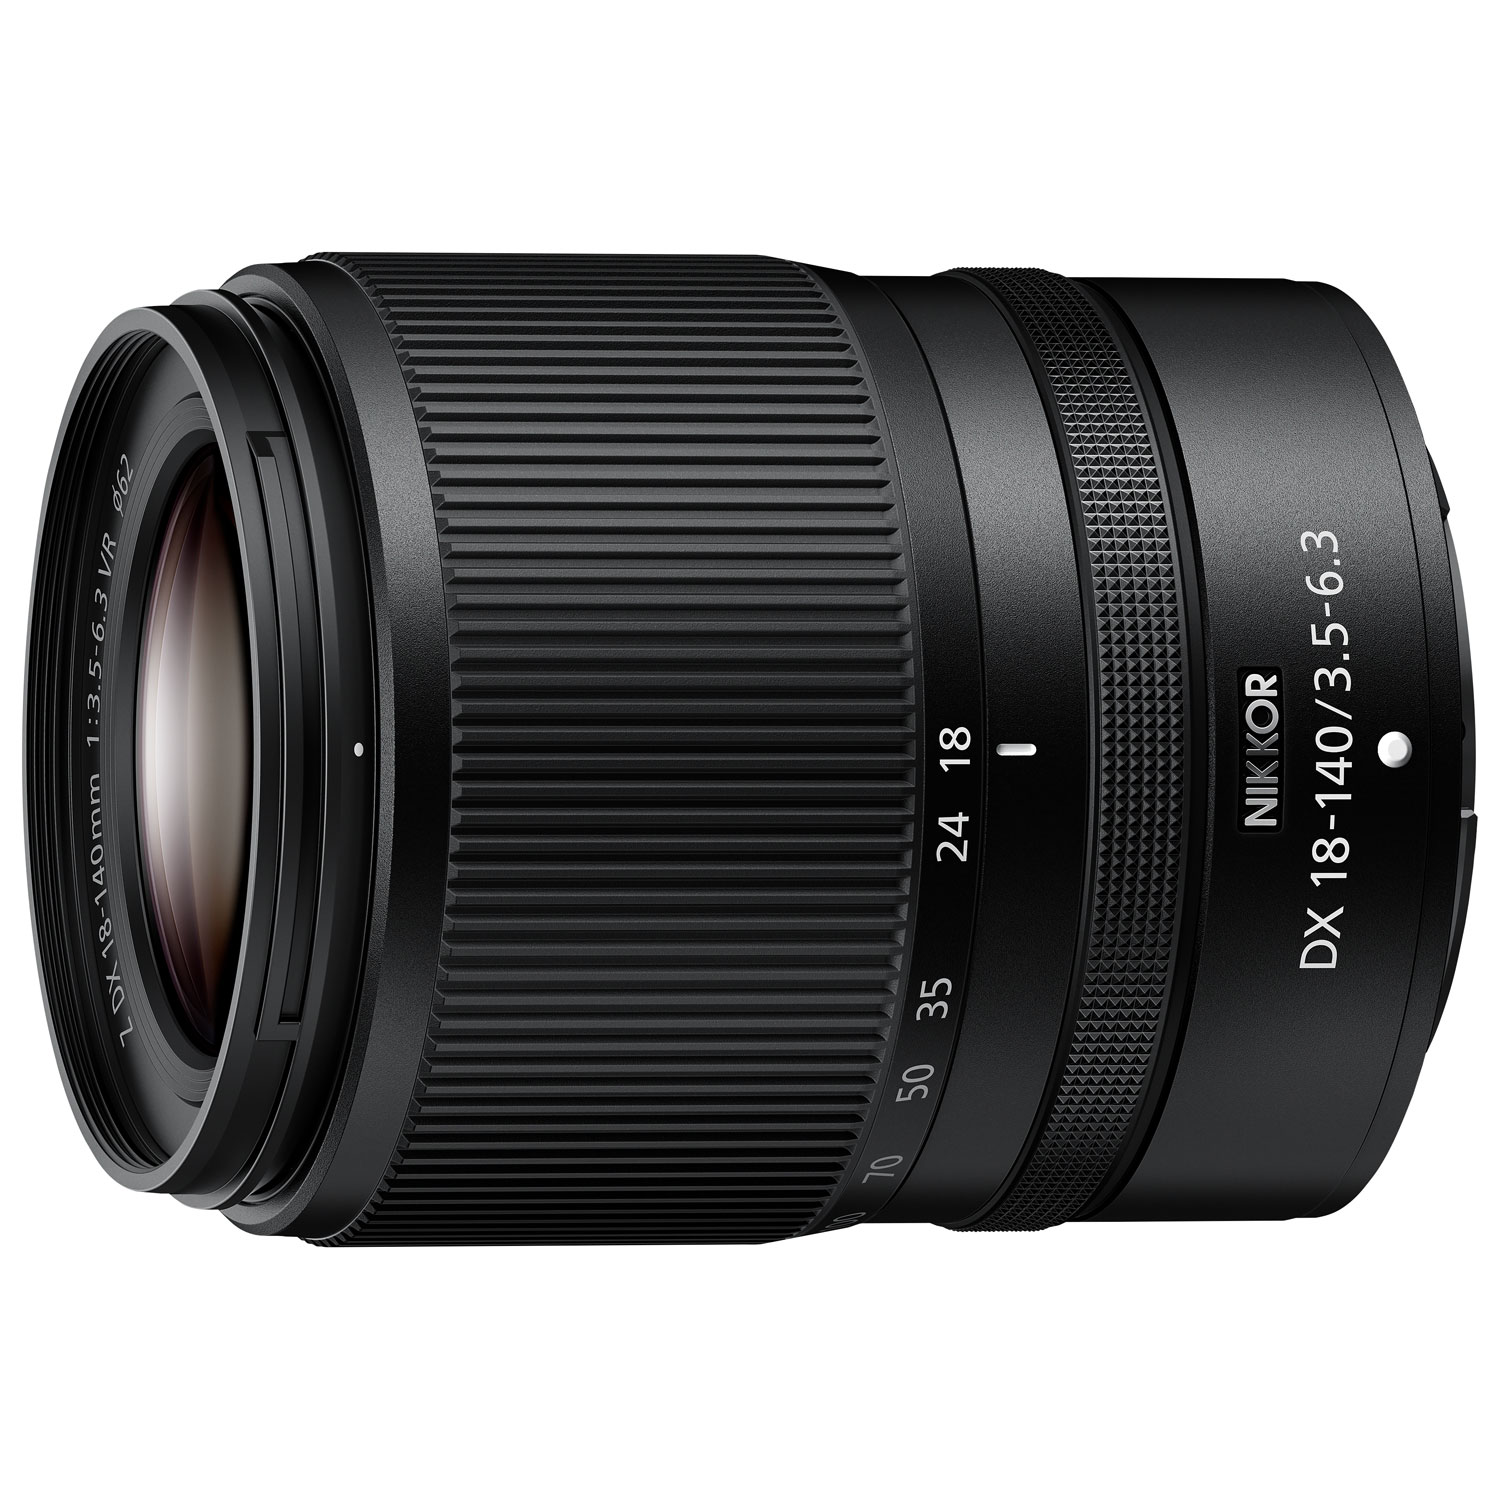 Nikon NIKKOR Z DX 18-140mm f/3.5-6.3 VR Lens - Black